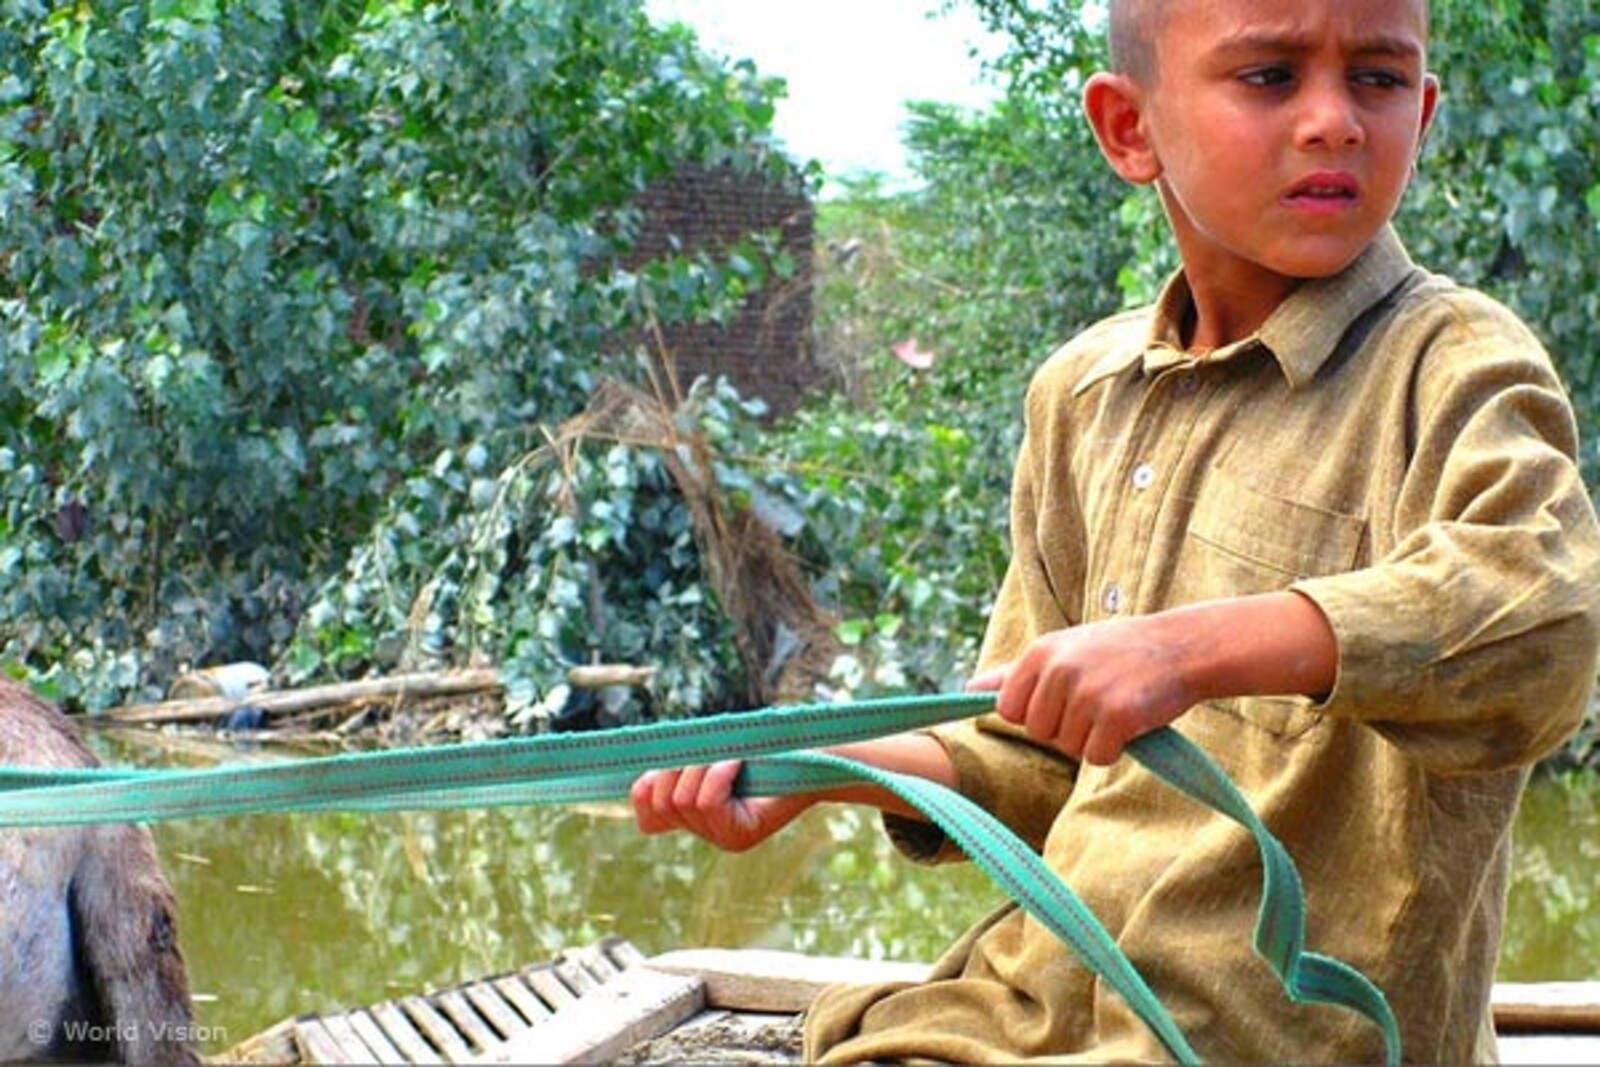 Flut Pakistan: Junge lenkt einen Eselskarren